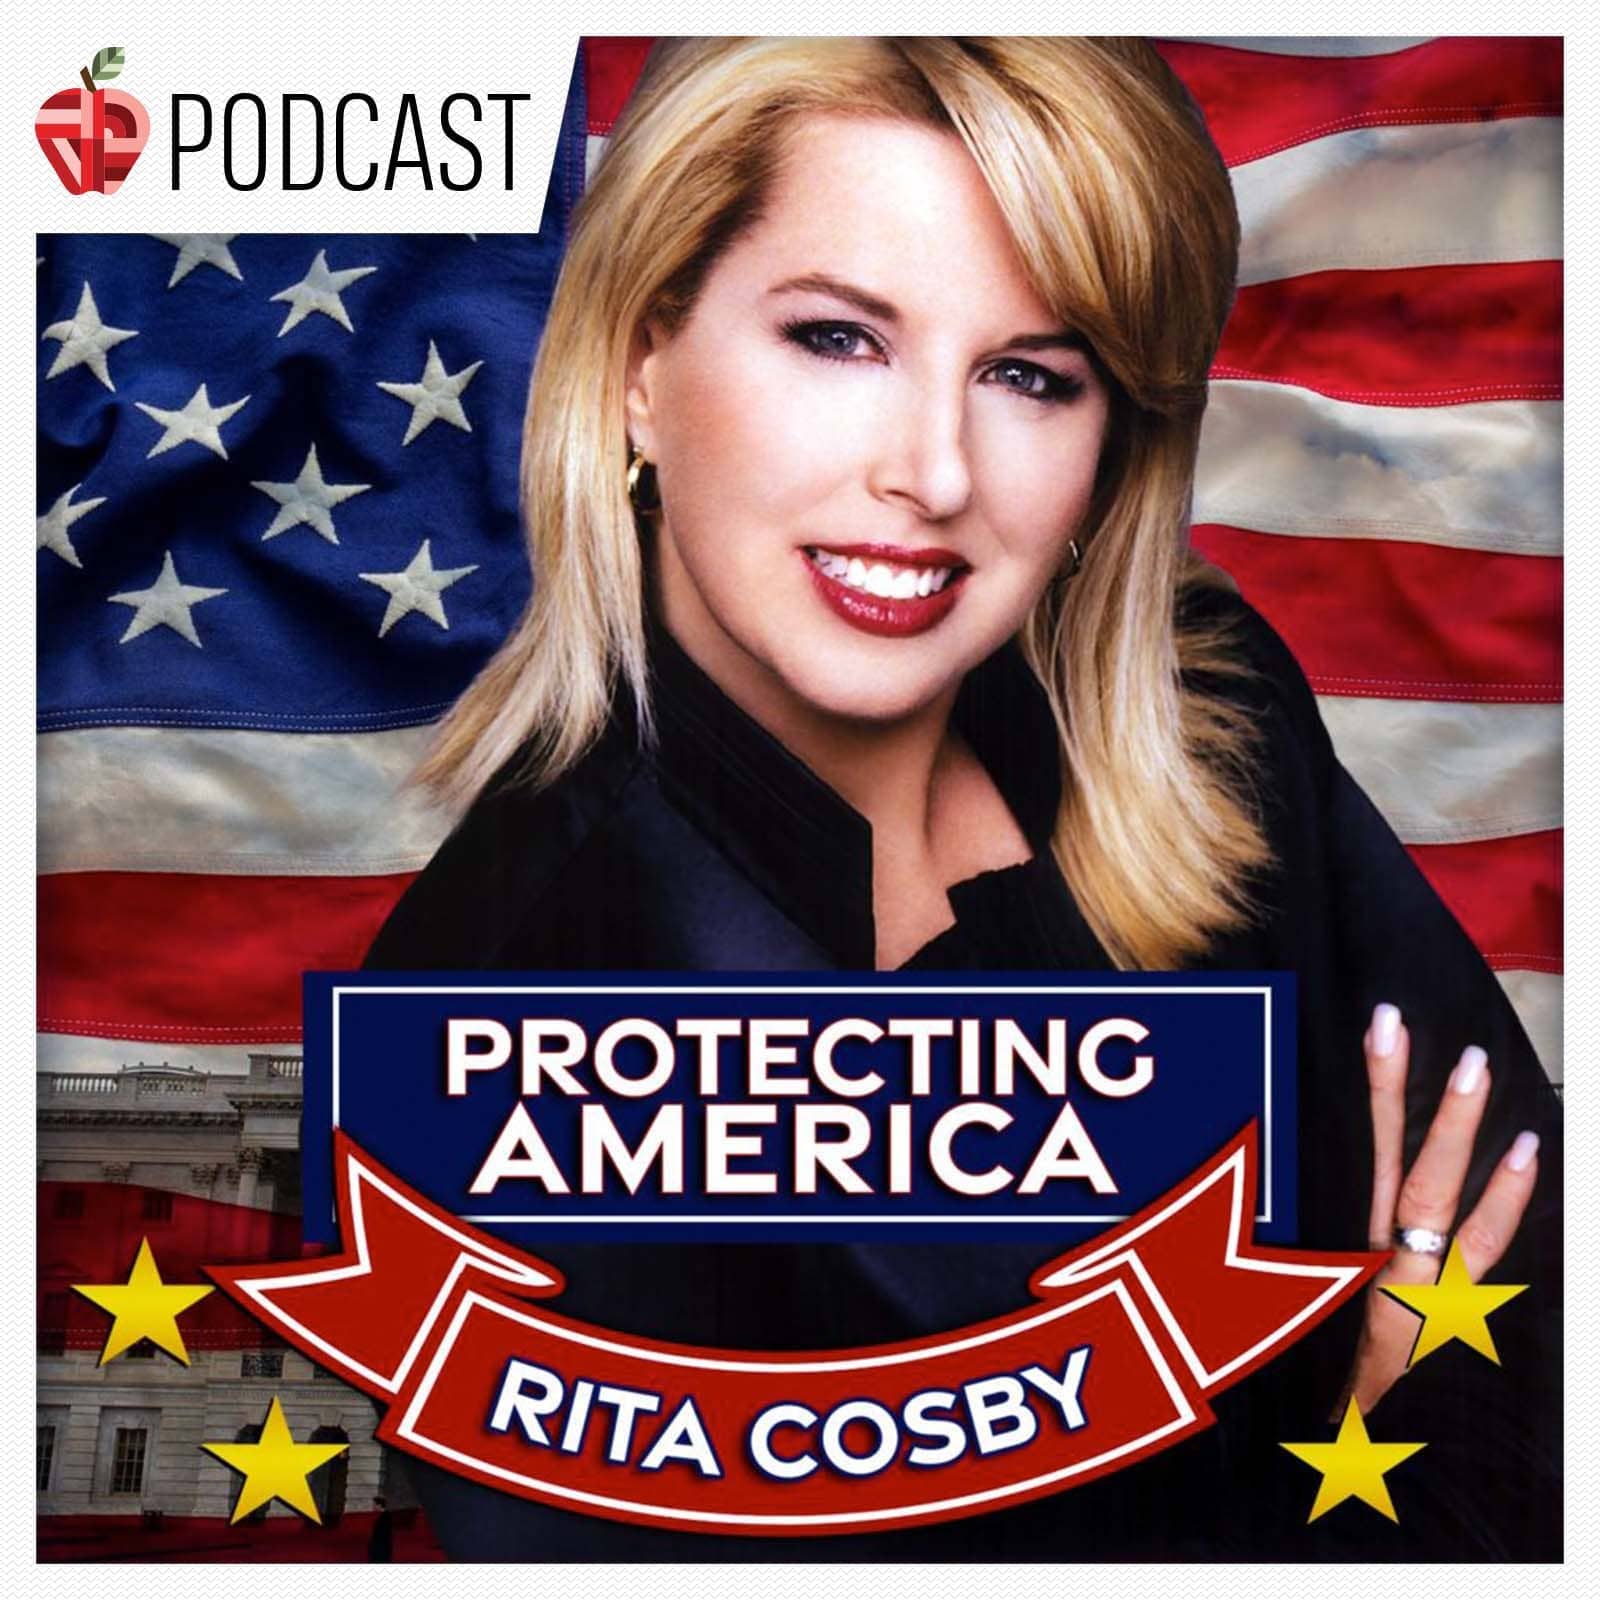 rita-cosby-protecting-america-correct-podcast-new-logo-54